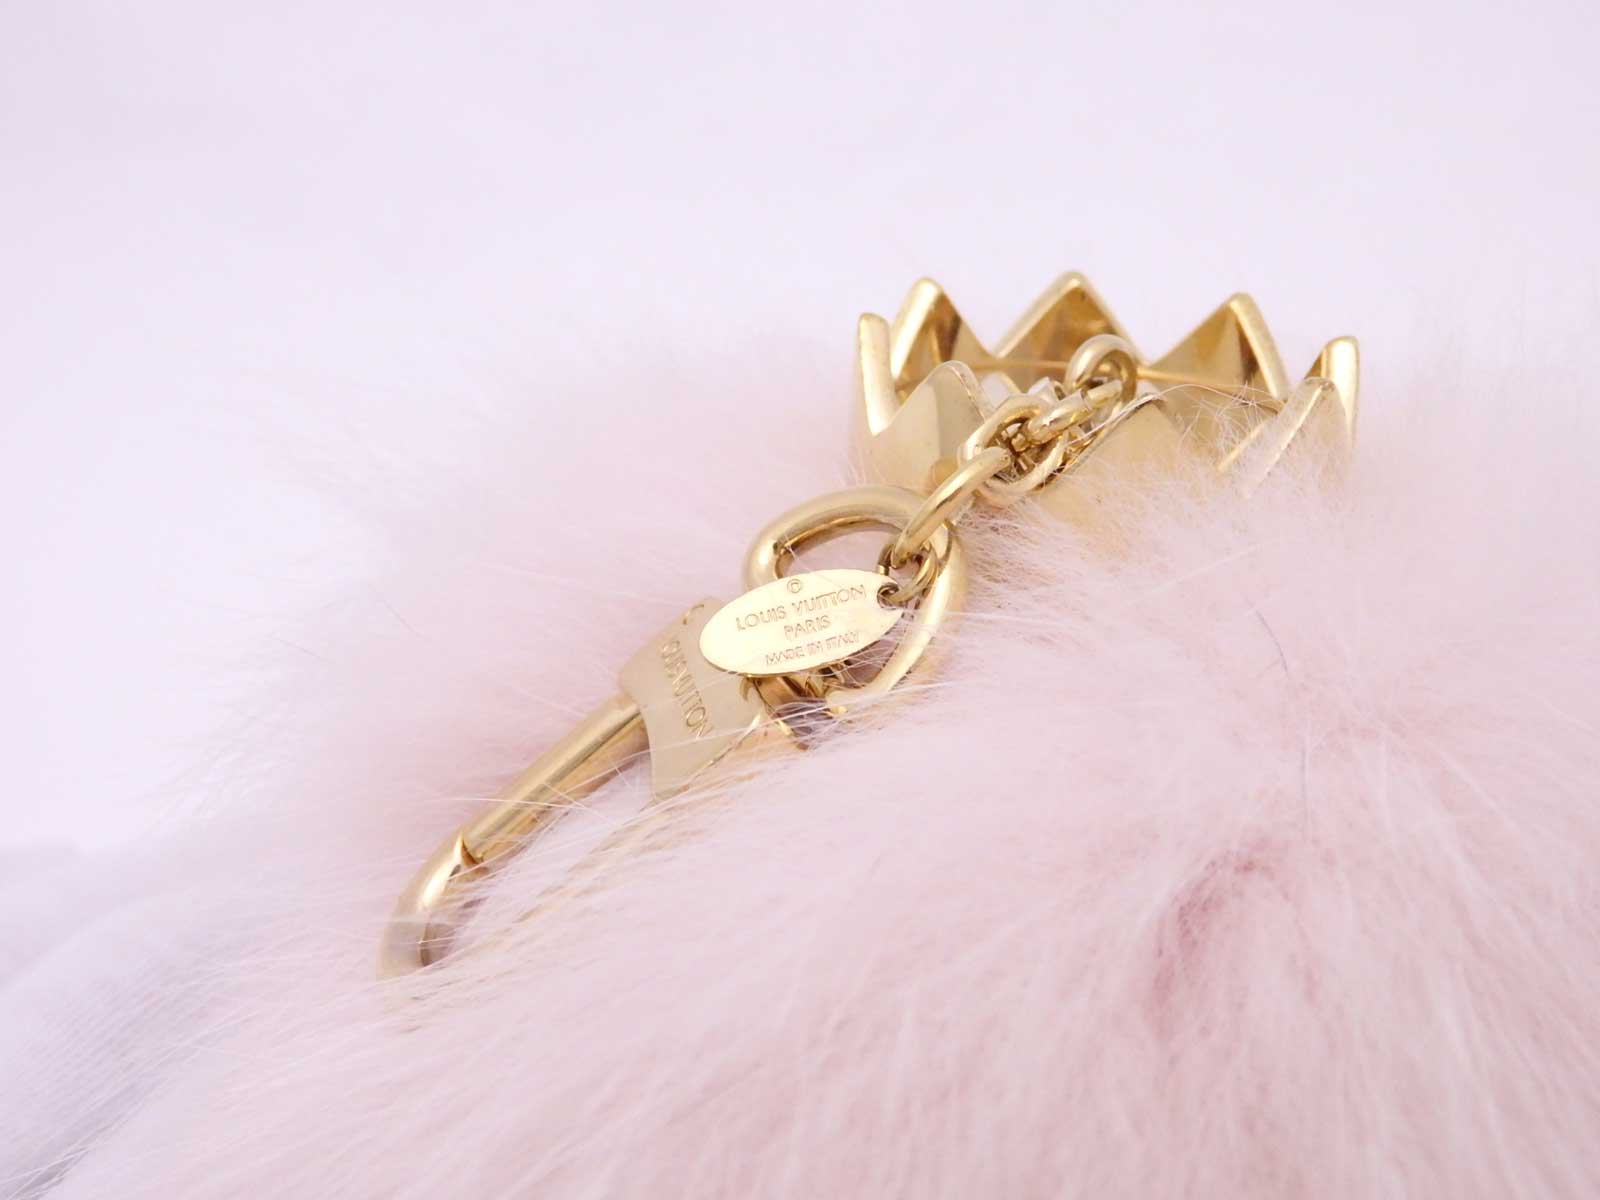 Auth Louis Vuitton Pom Pom Bag Charm Pink Fur/Goldtone - e45686d | eBay